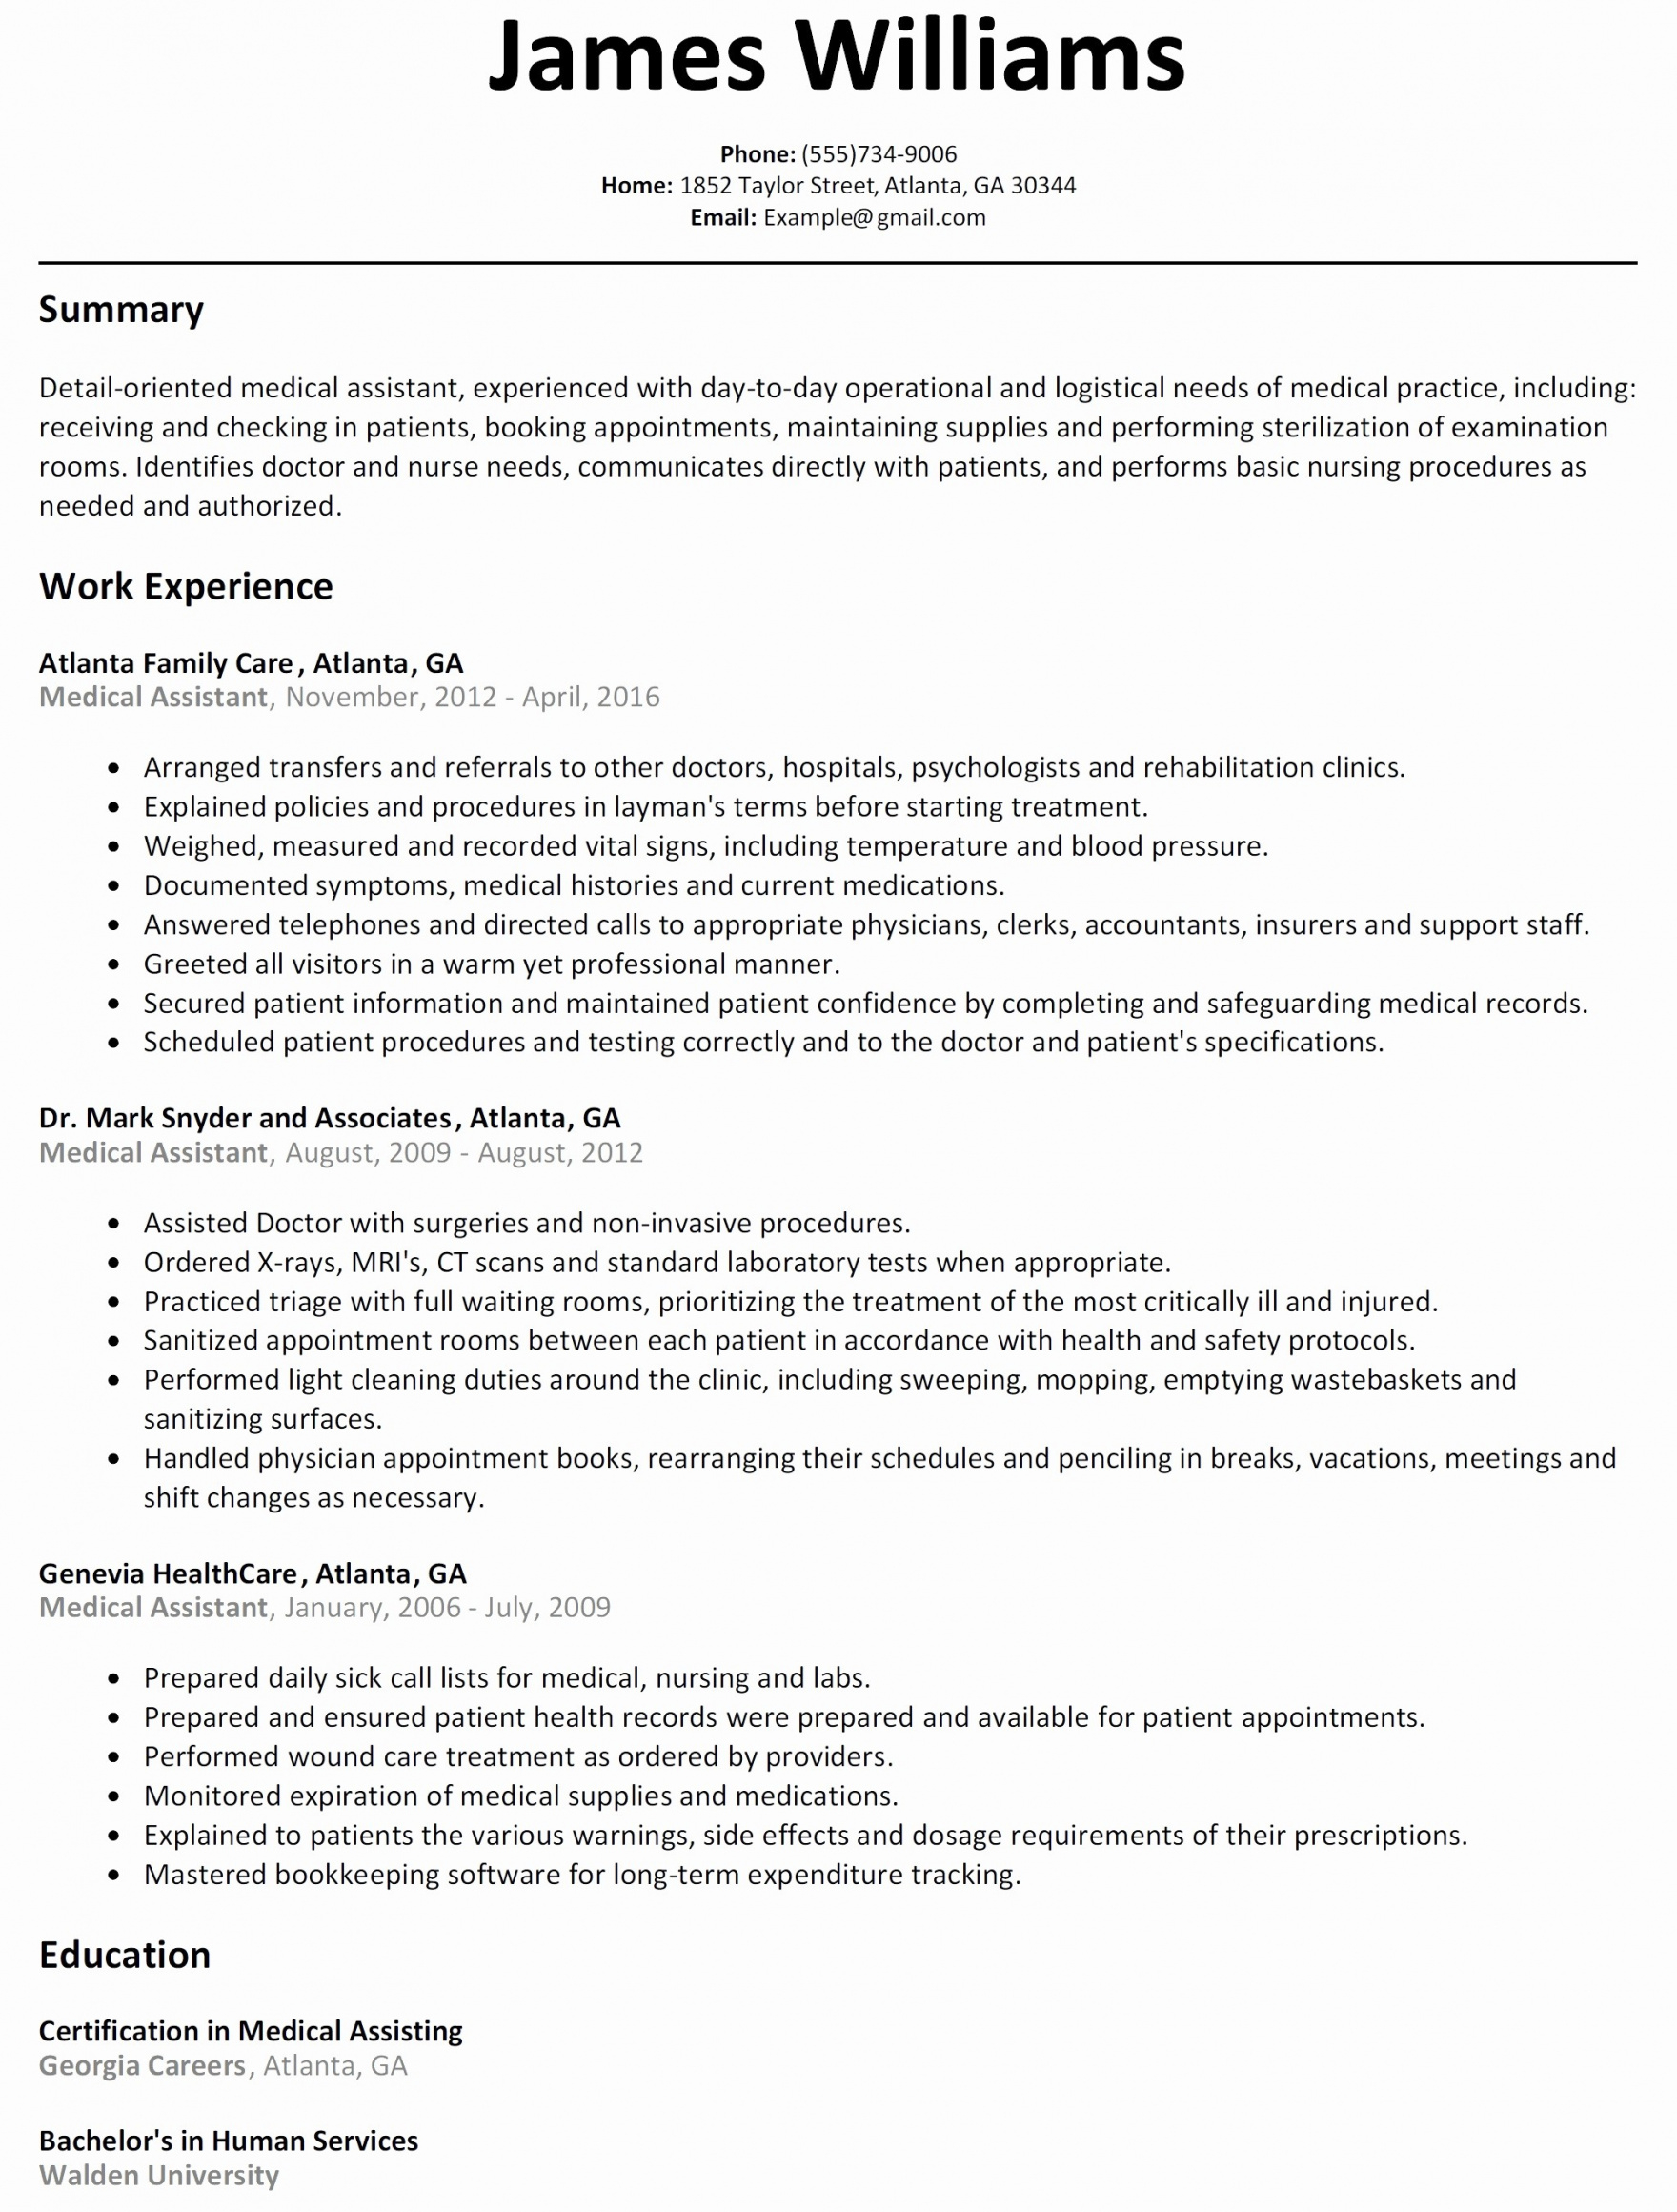 Free Resume Templates Microsoft Word Medical Resume Template Free Resume Simple Templates free resume templates microsoft word|wikiresume.com